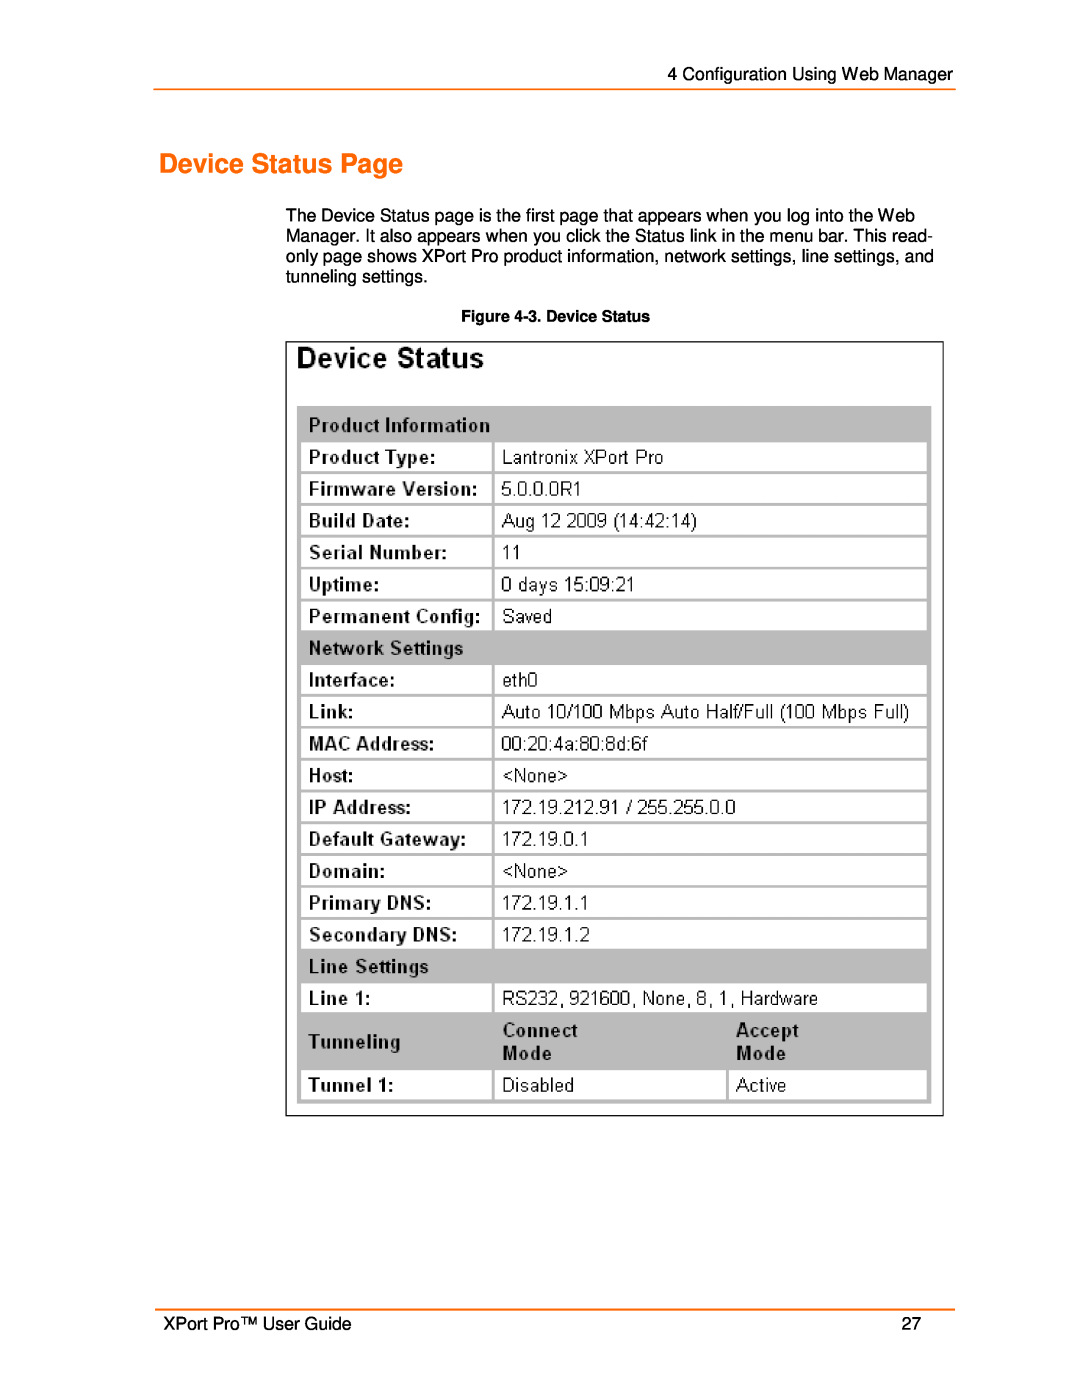 Lantronix 900-560 manual Device Status Page, 3. Device Status 